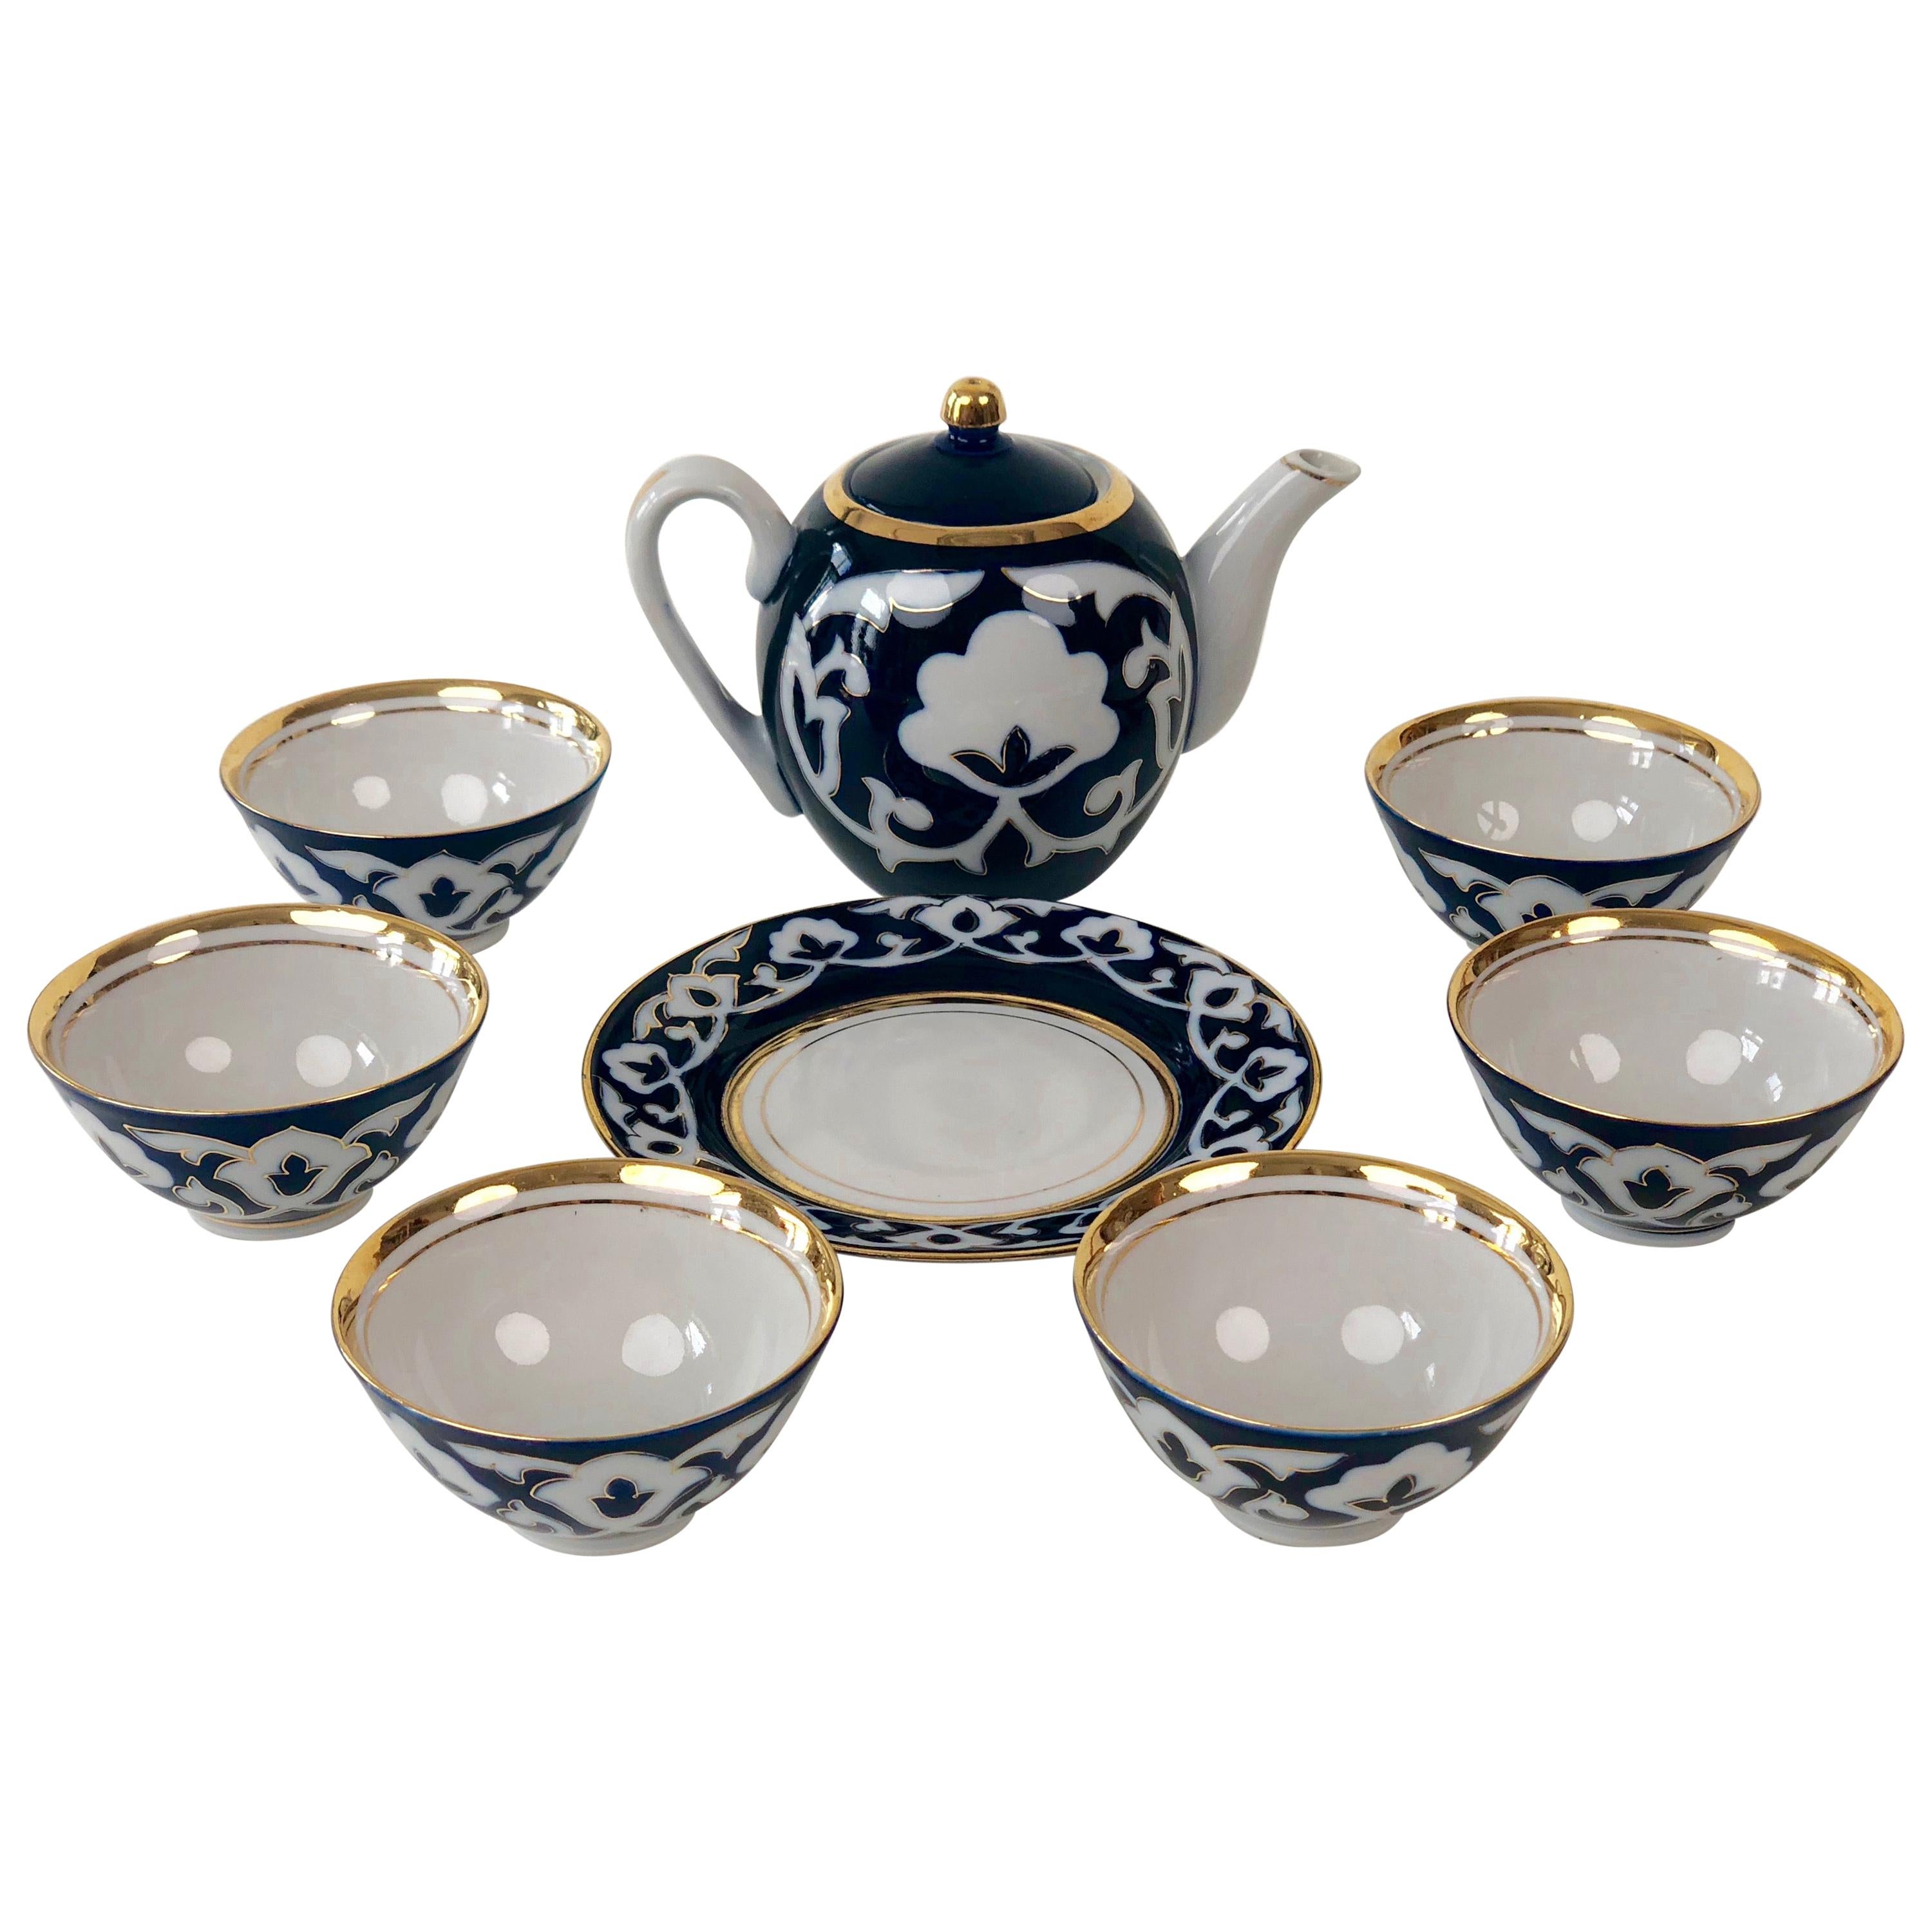 Hand Painted Porcelain Tea Set from Central Asia in Kobalt Blue & Gold